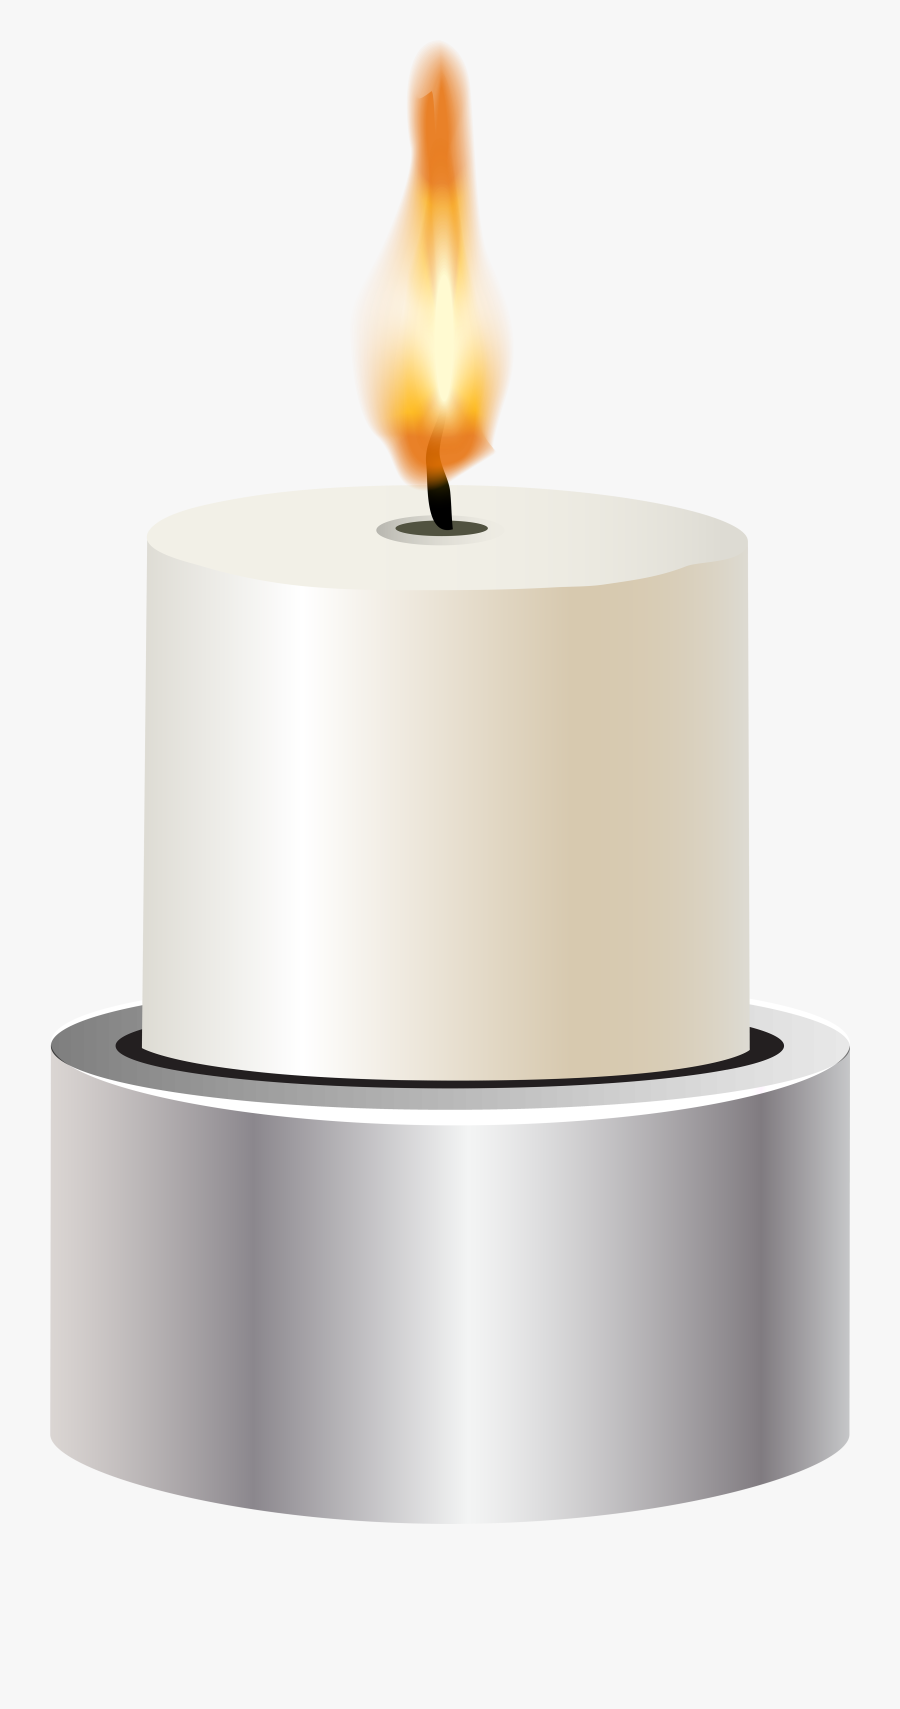 Candle Png Clip Art - سكرابز شموع, Transparent Clipart